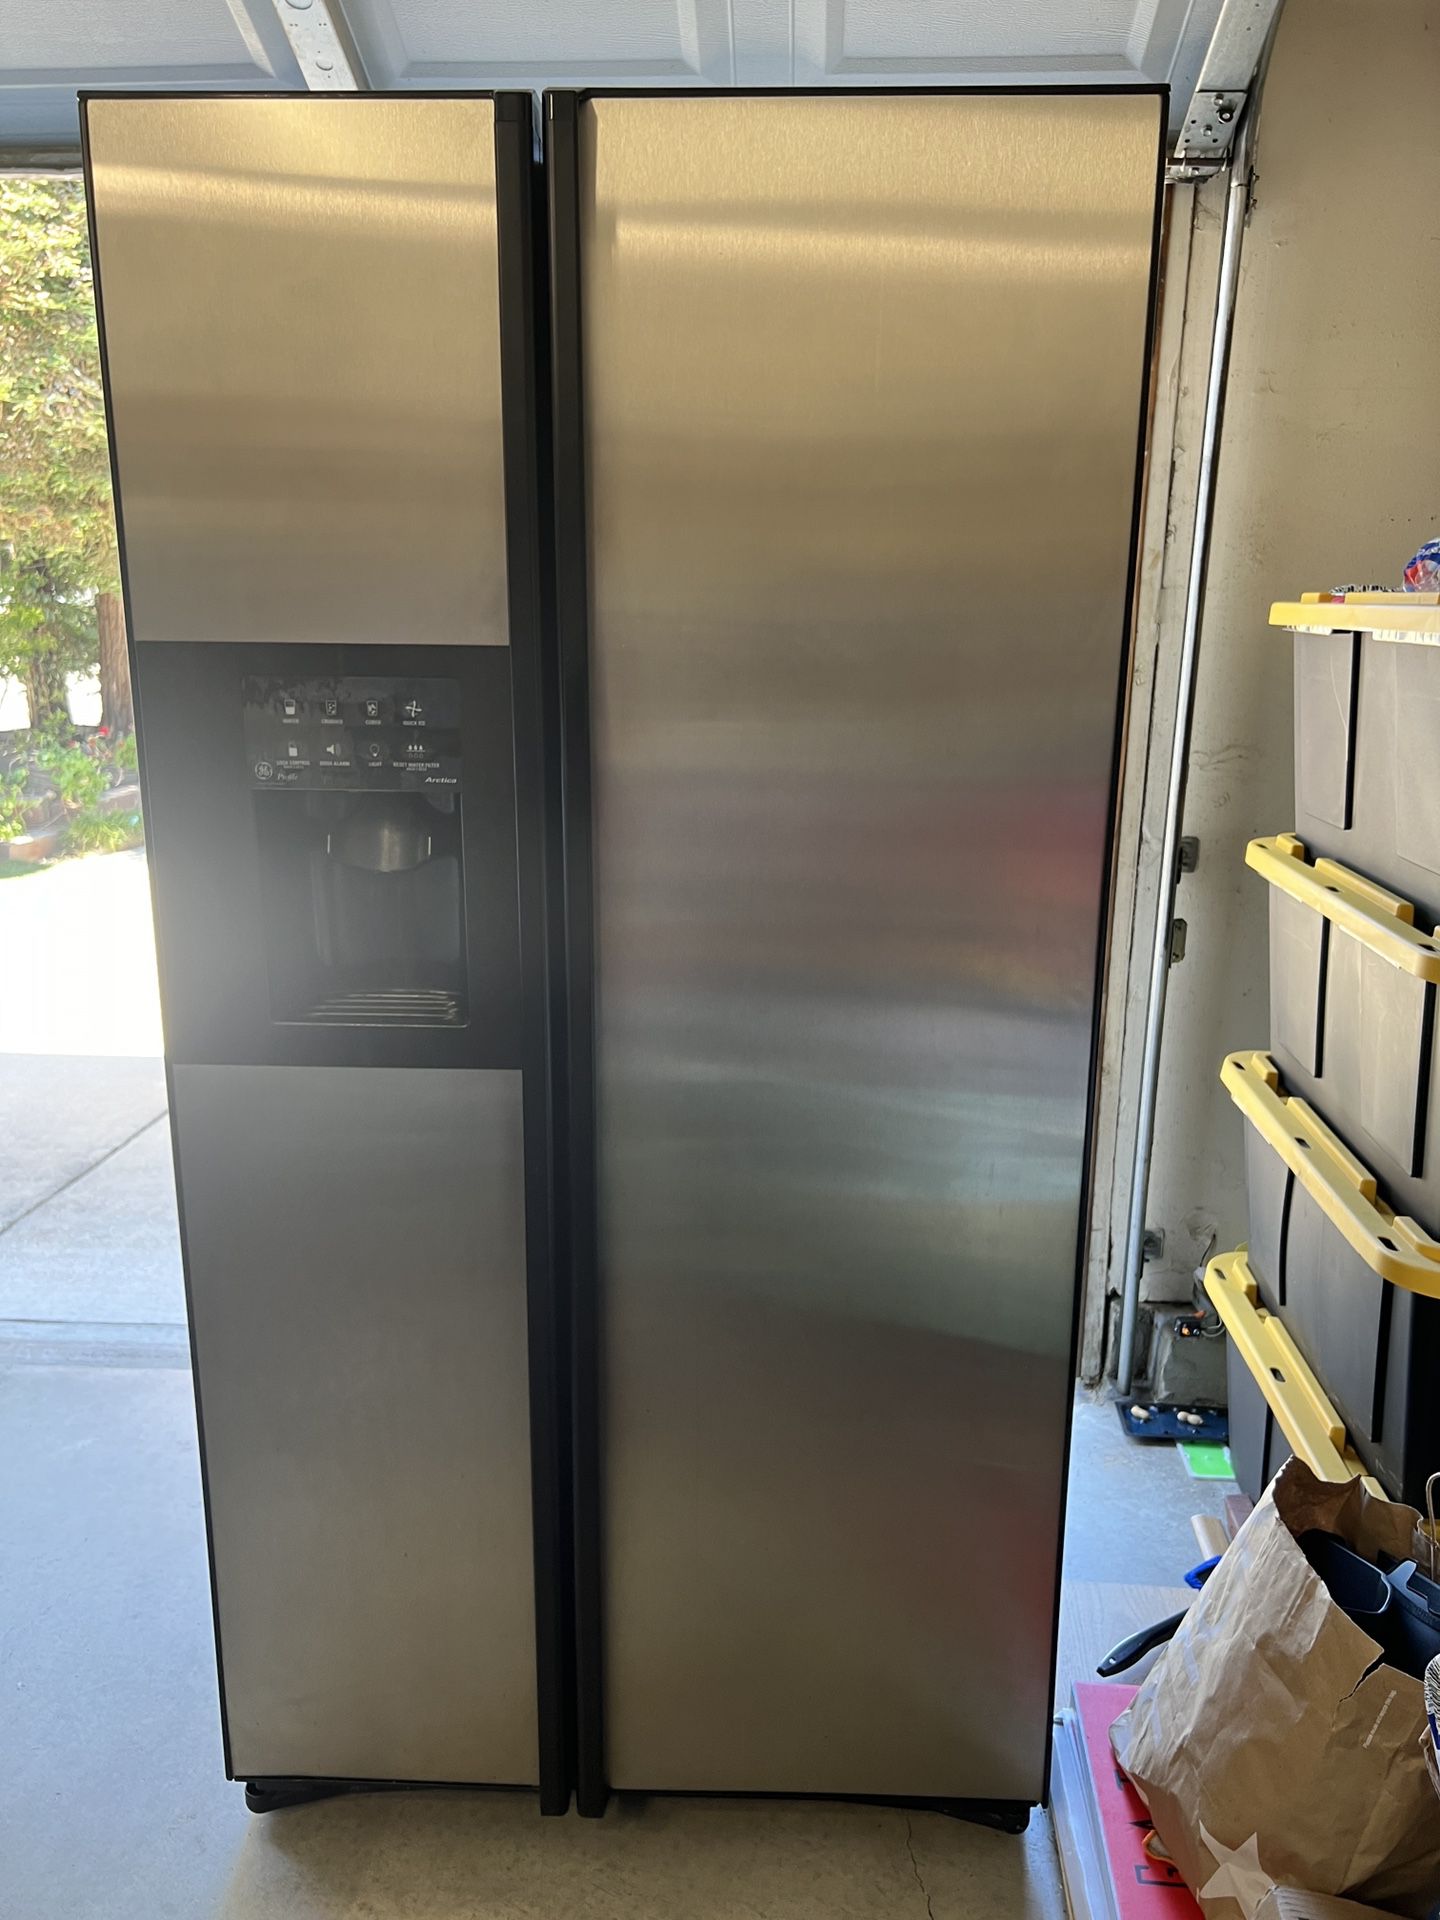 GE Refrigerator In Good Condition 